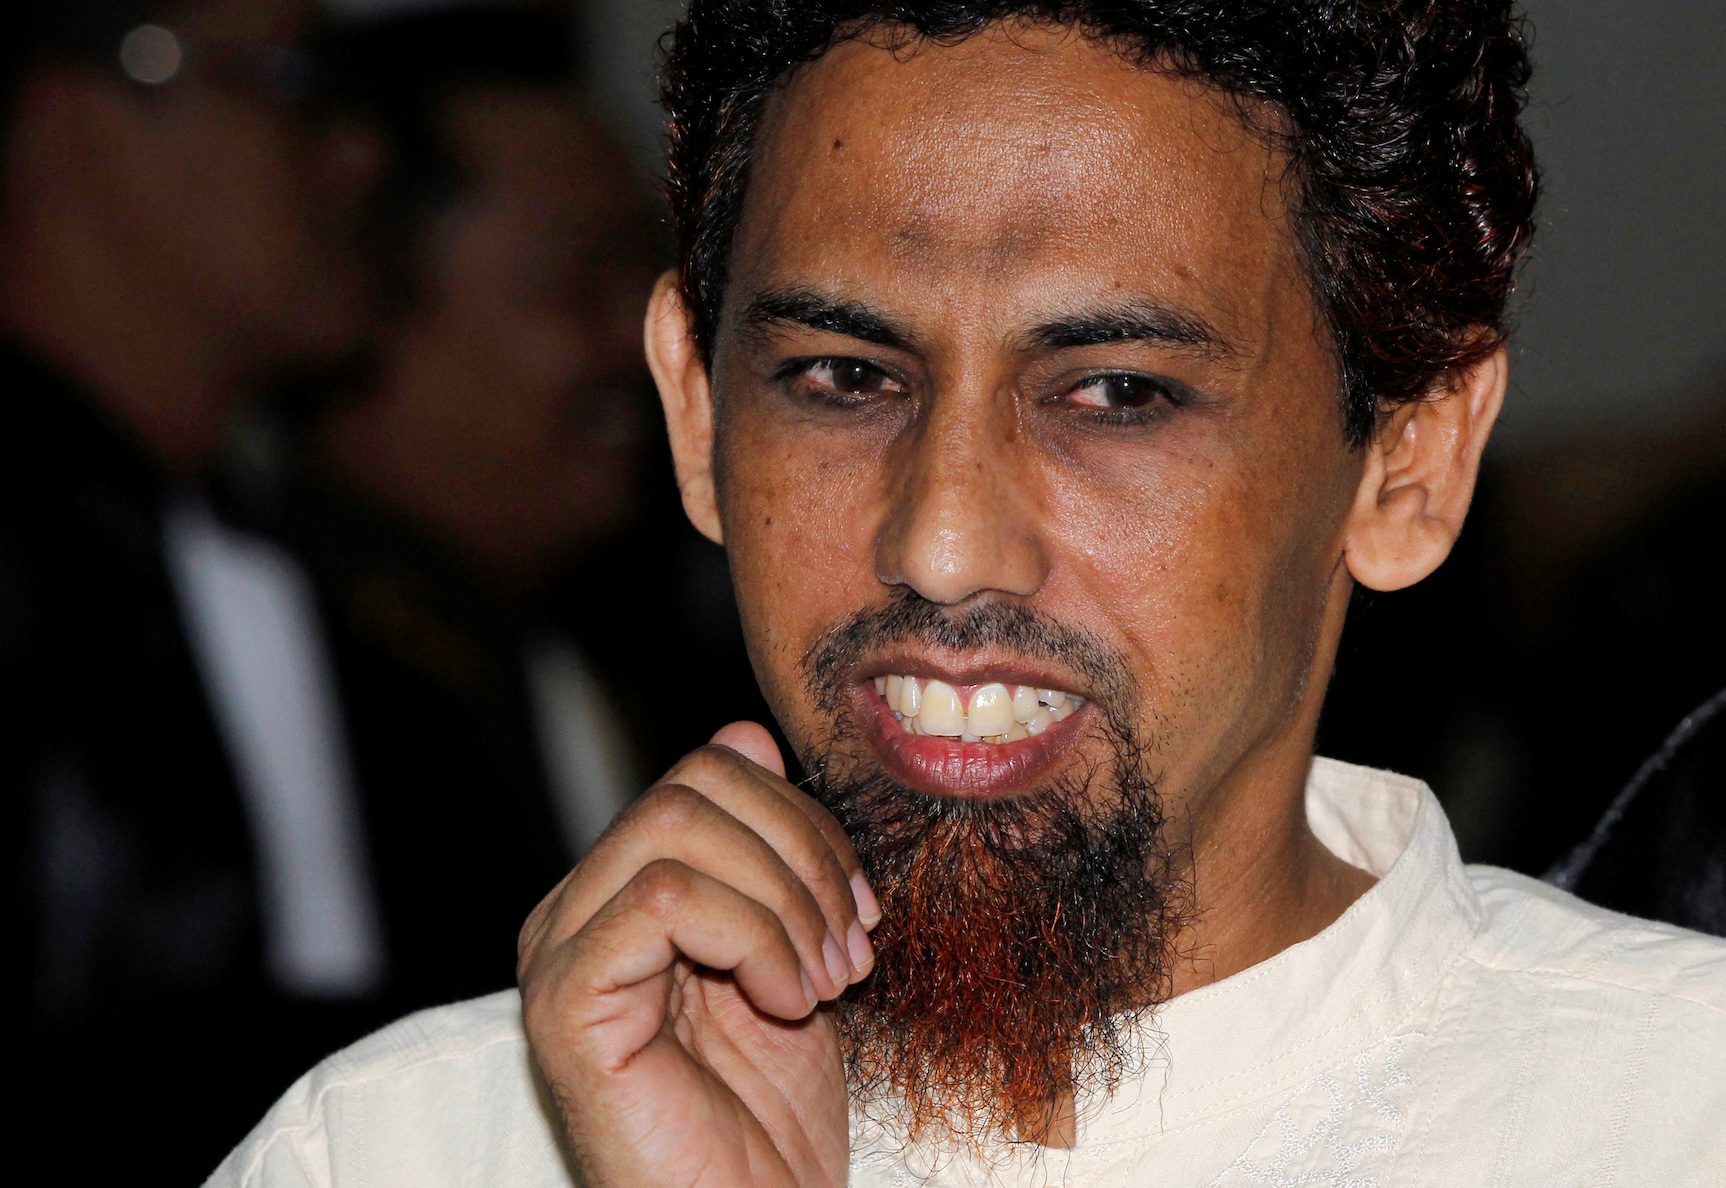 Indonesia releases on parole Bali bomb maker Umar Patek